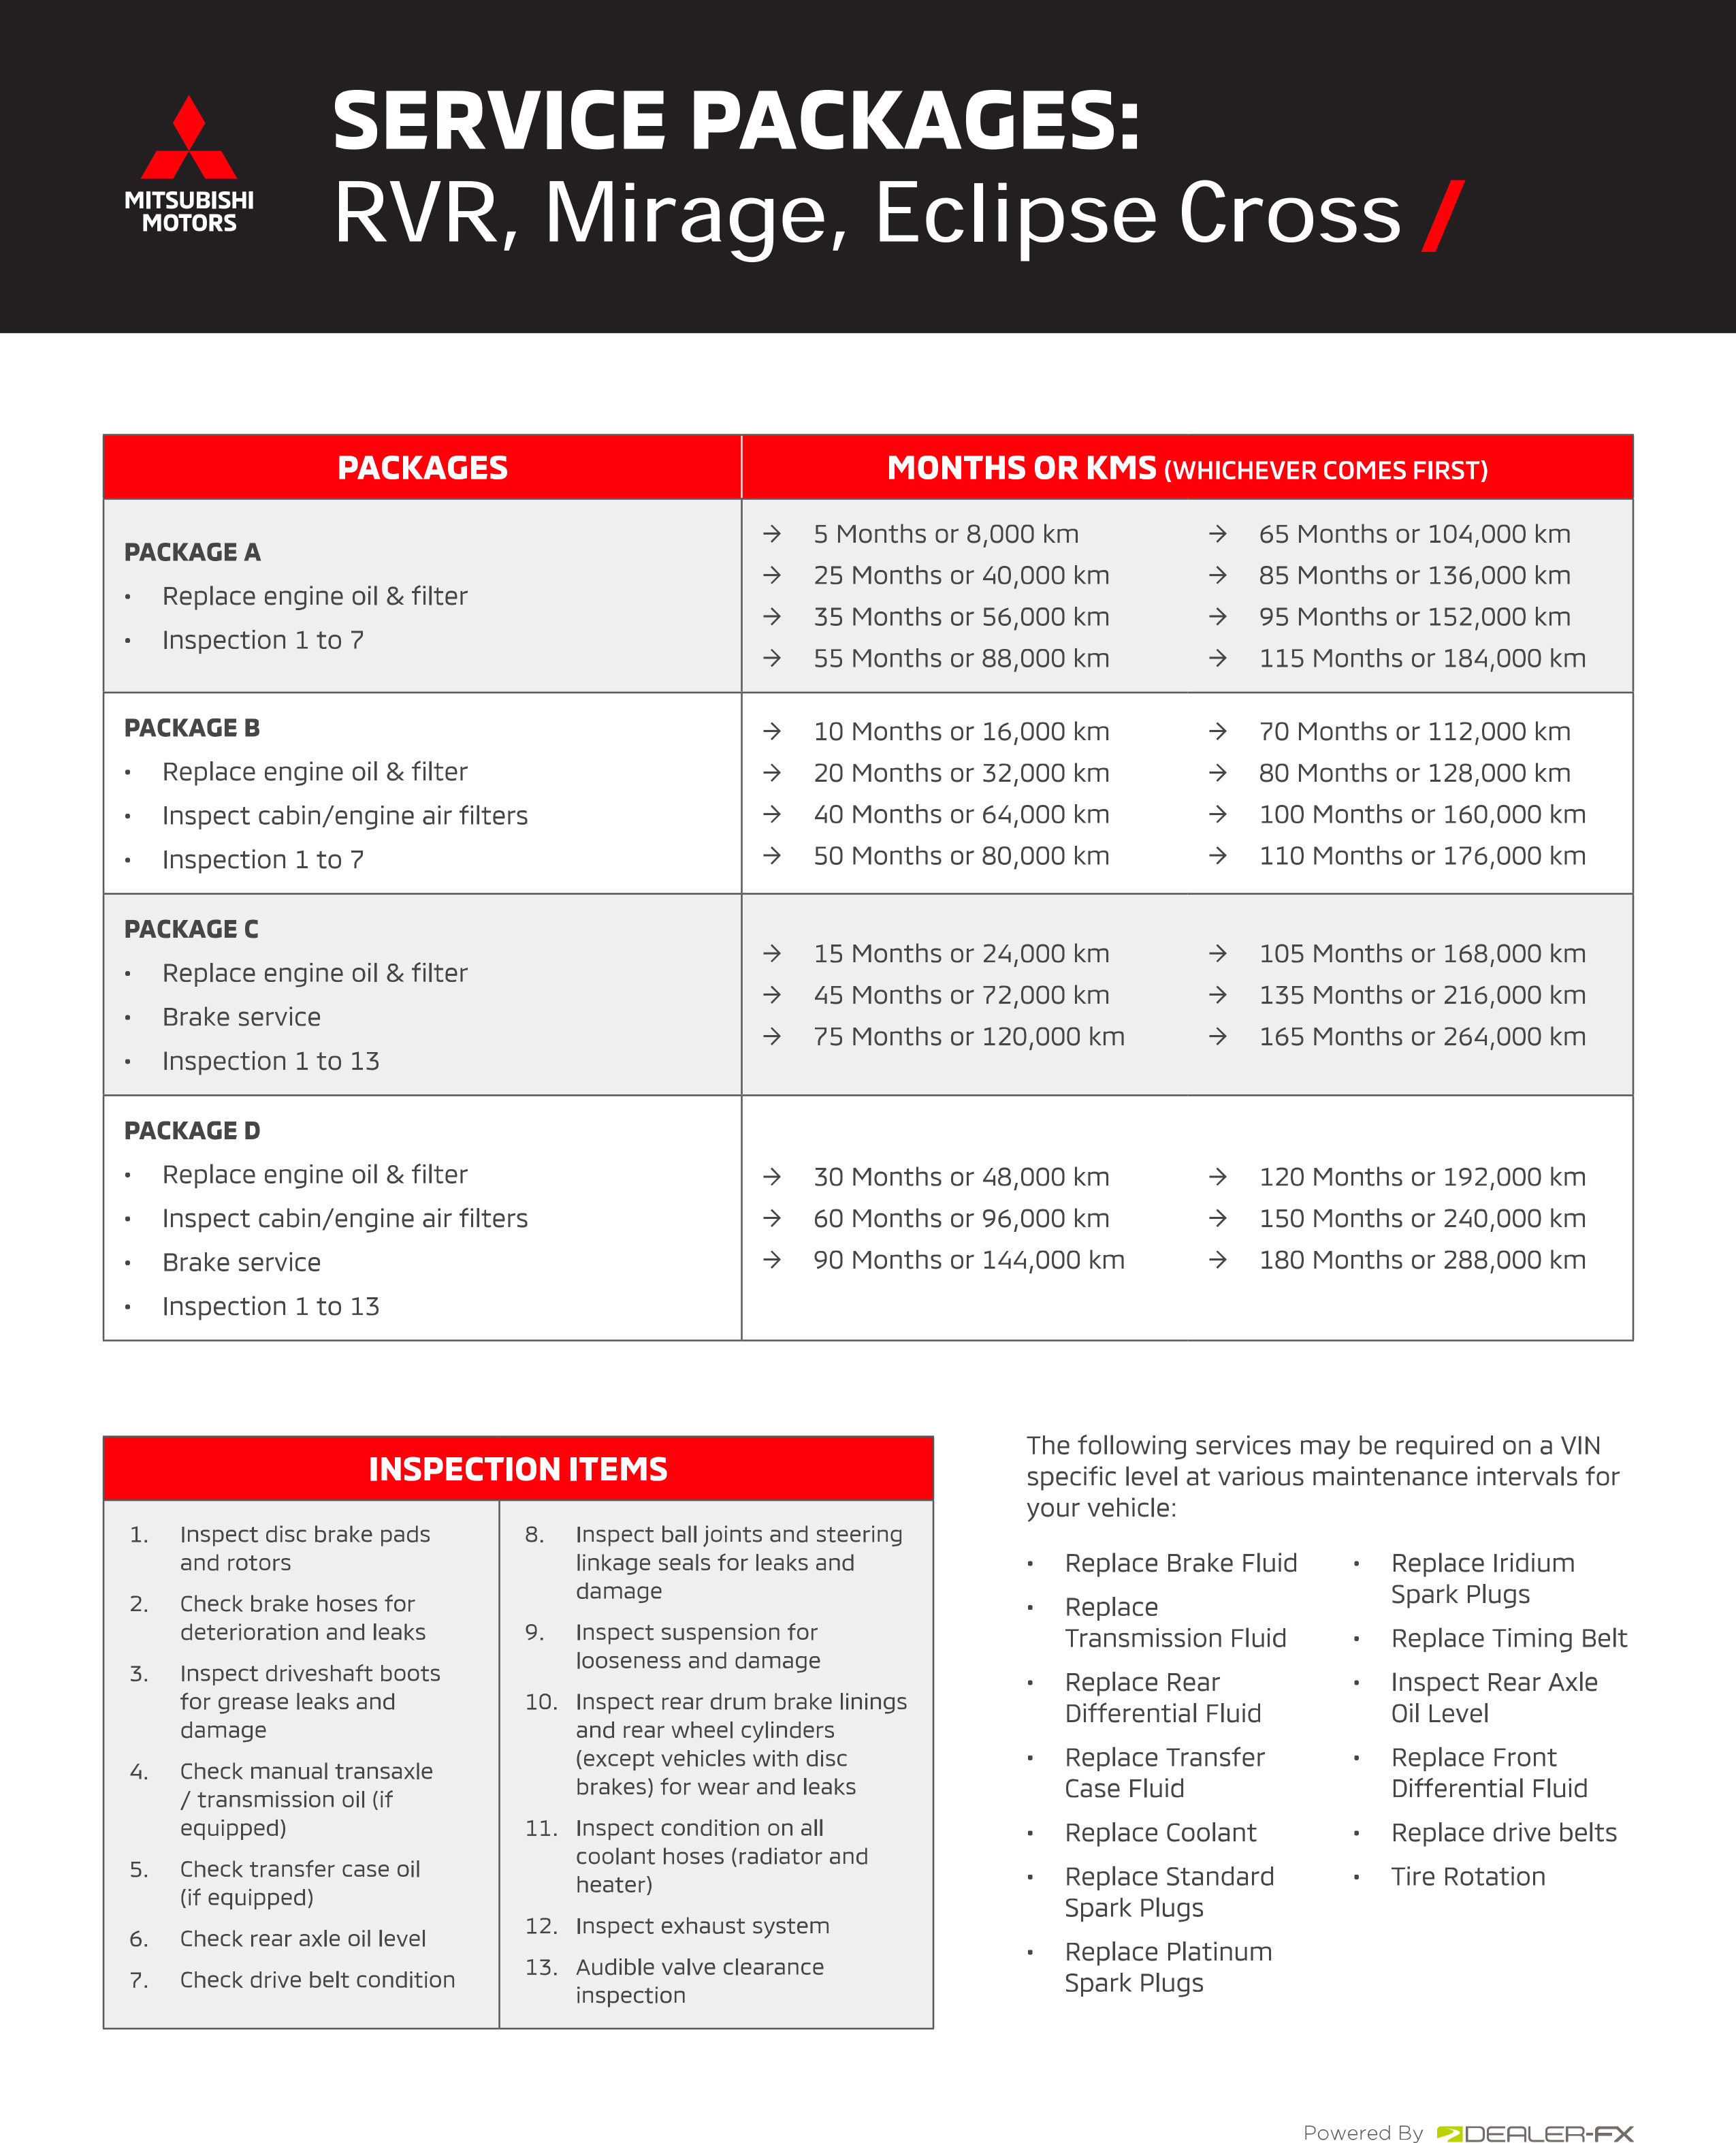 RVR, Mirage, Eclipse Cross